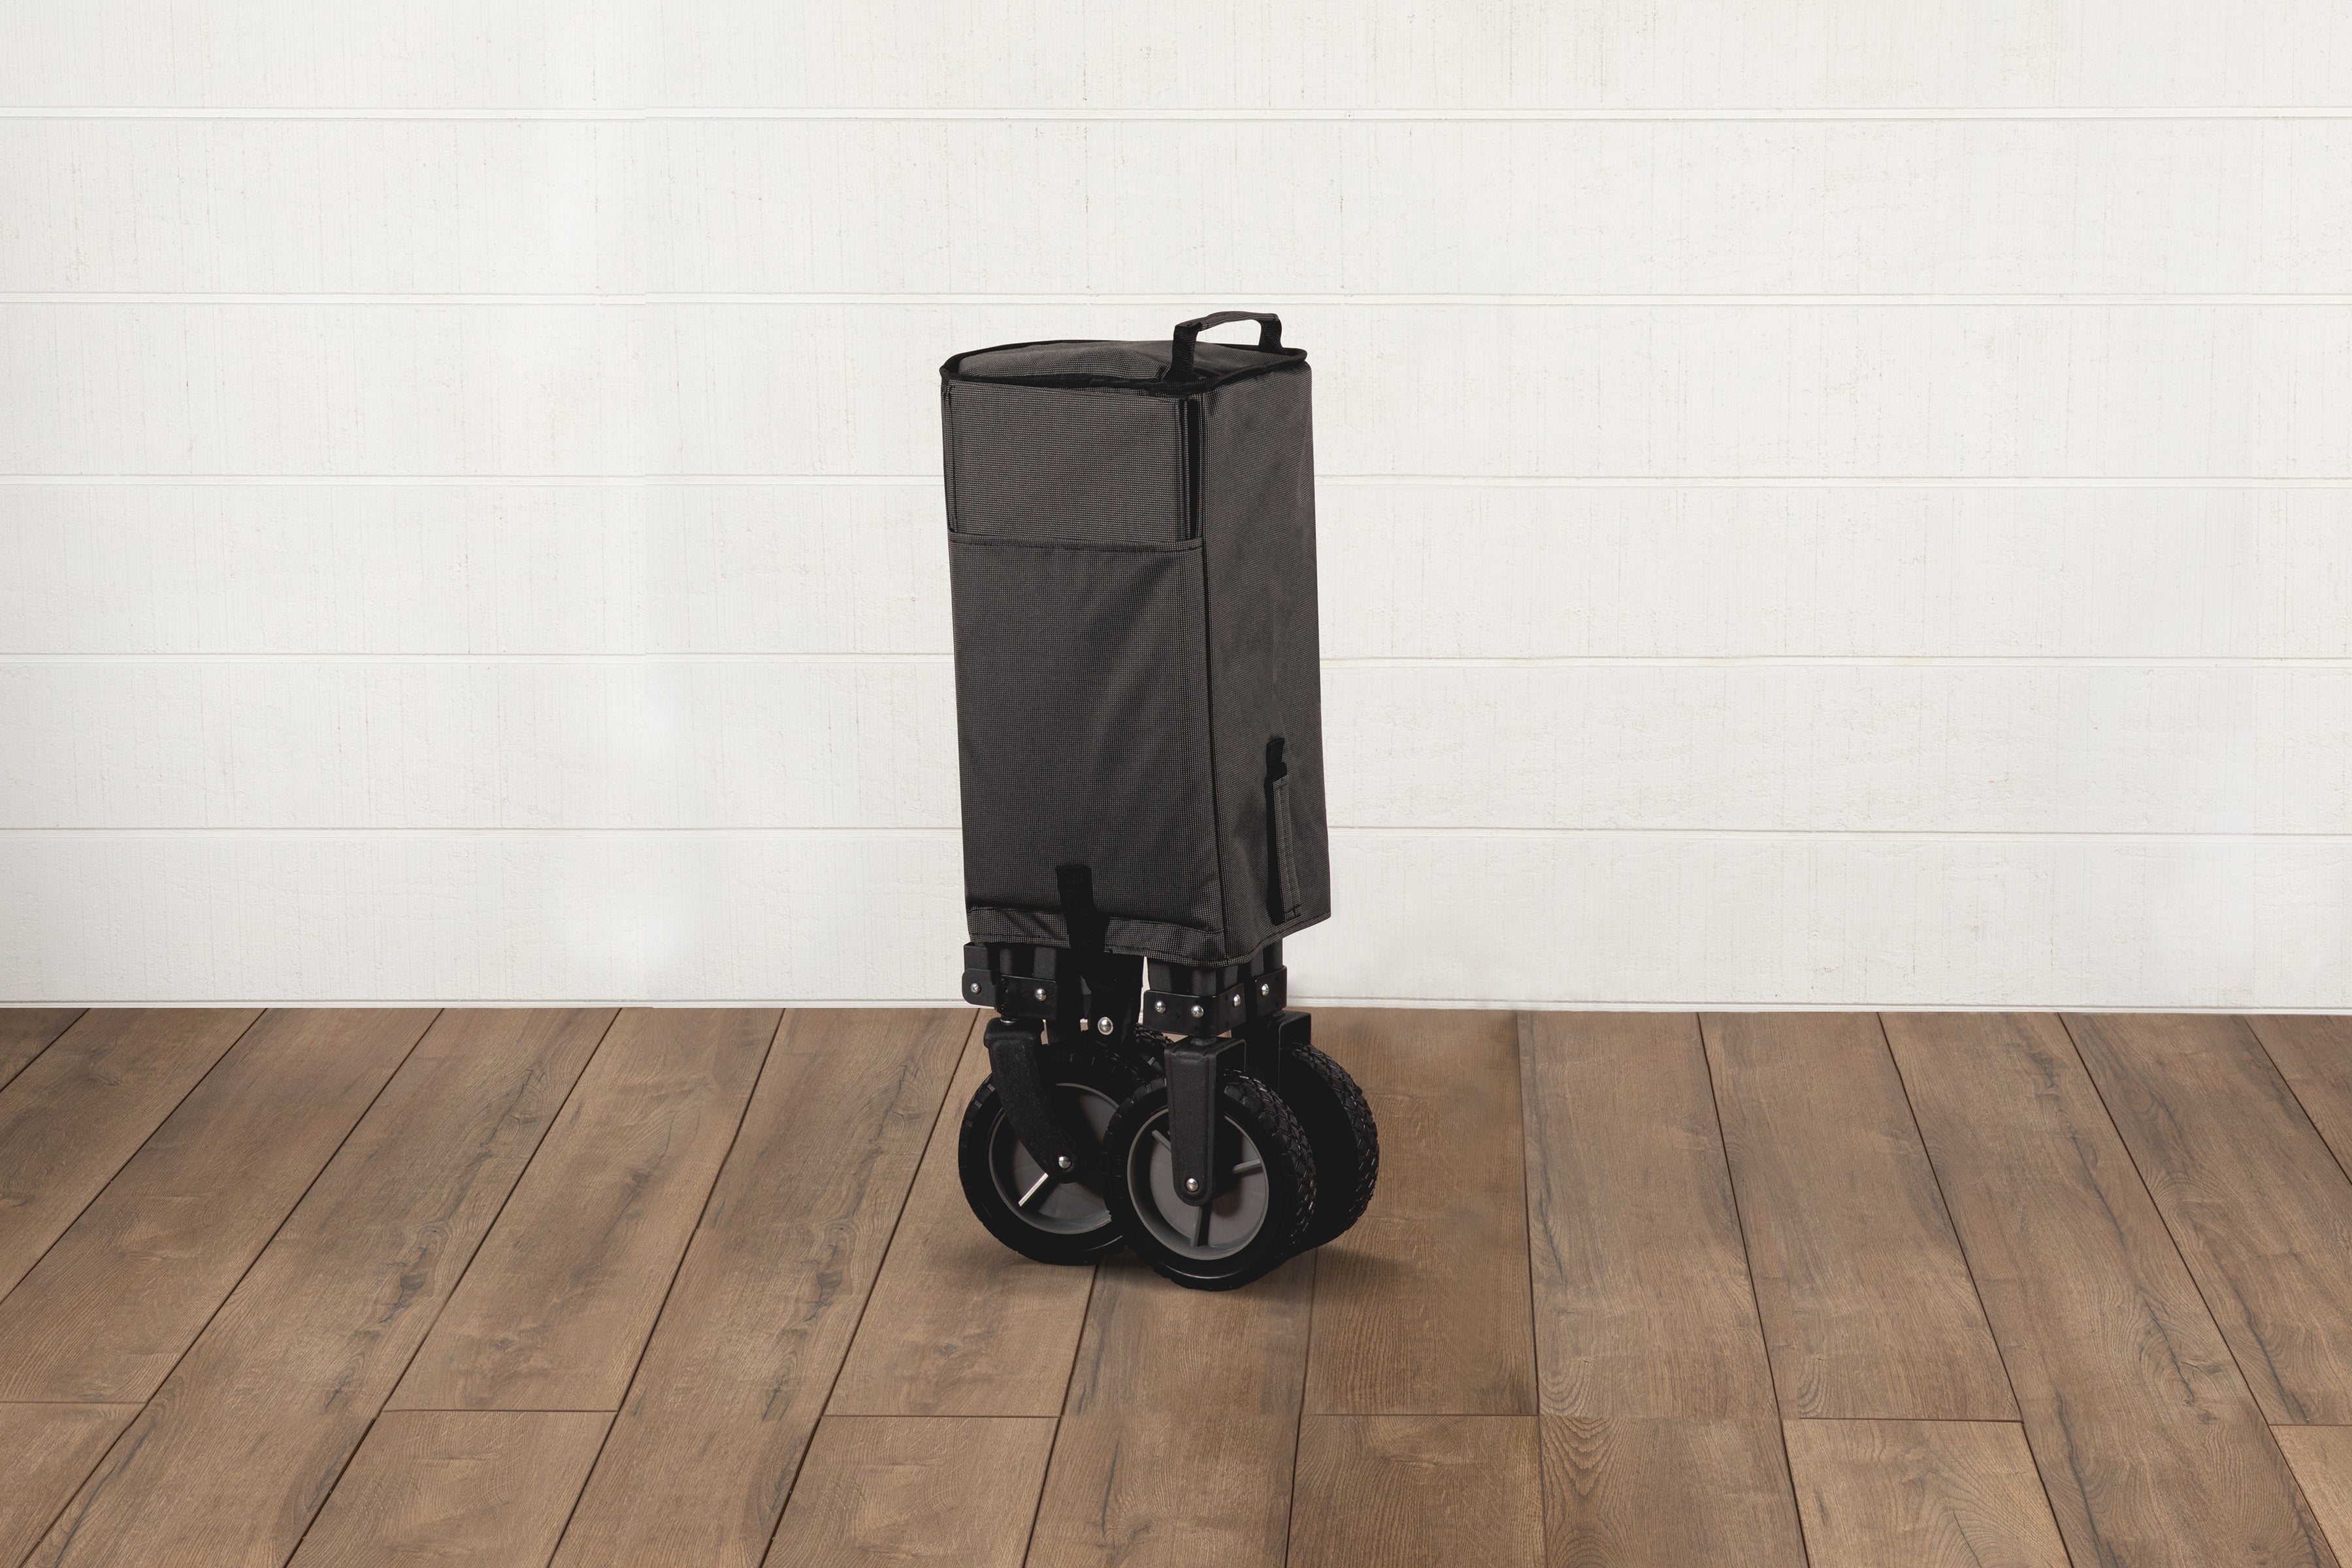 Toronto Blue Jays - Adventure Wagon Portable Utility Wagon